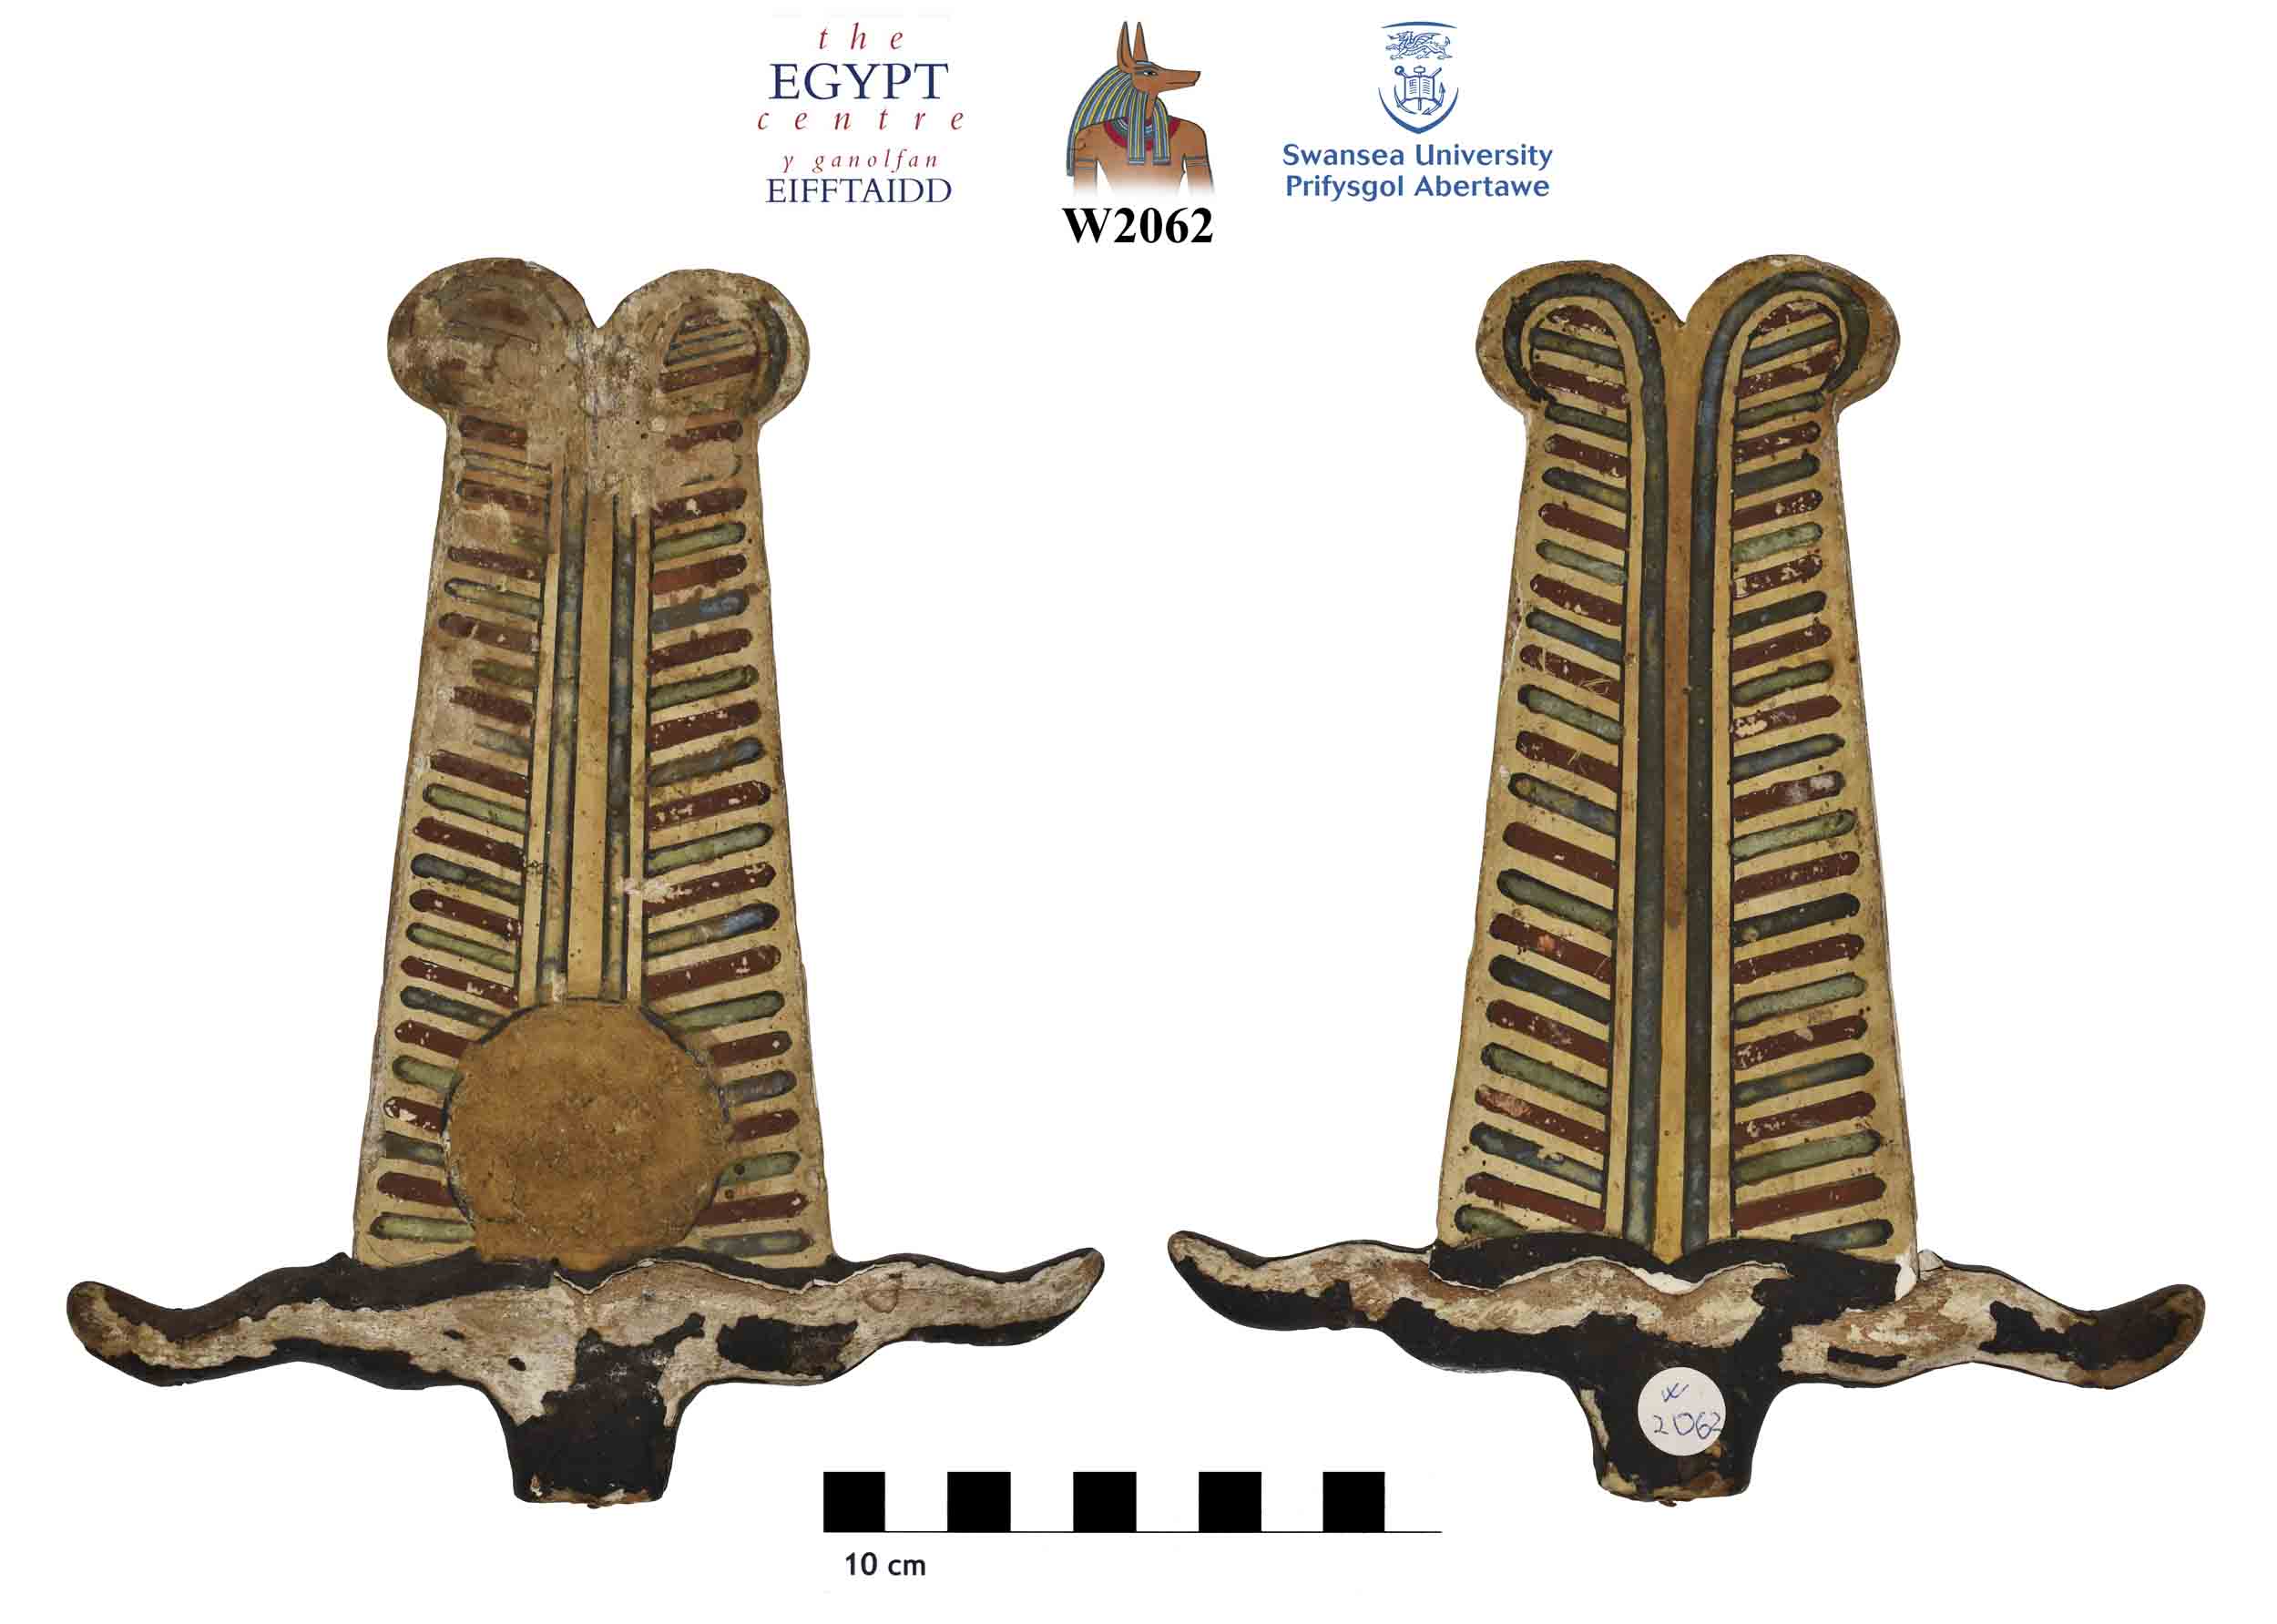 Image for: Headdress from a Ptah-Sokar-Osiris figure